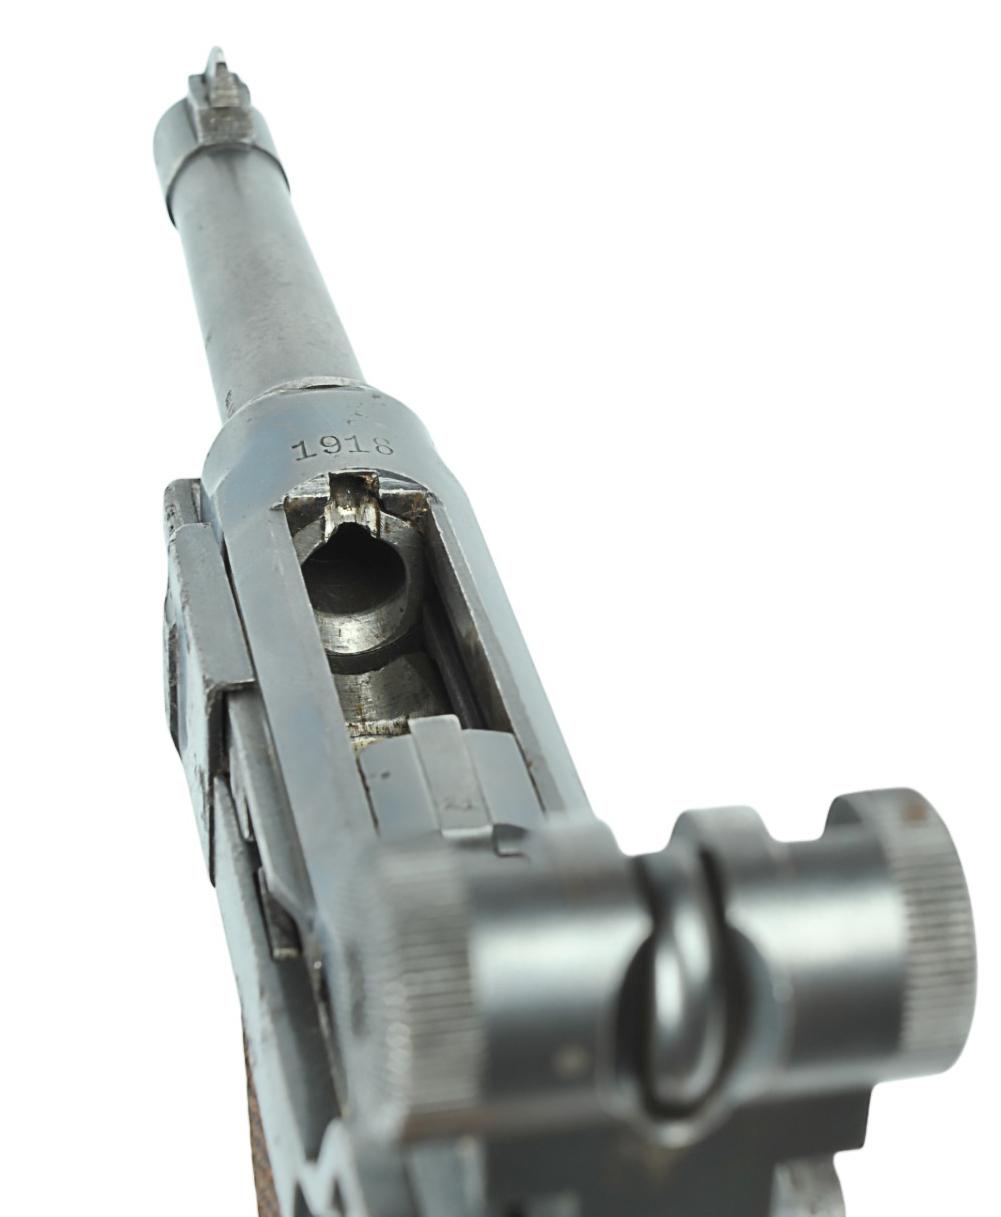 Imperial German WWI era P-08 9mm Luger Semi-Automatic Pistol - FFL # 7221 (KDC1)